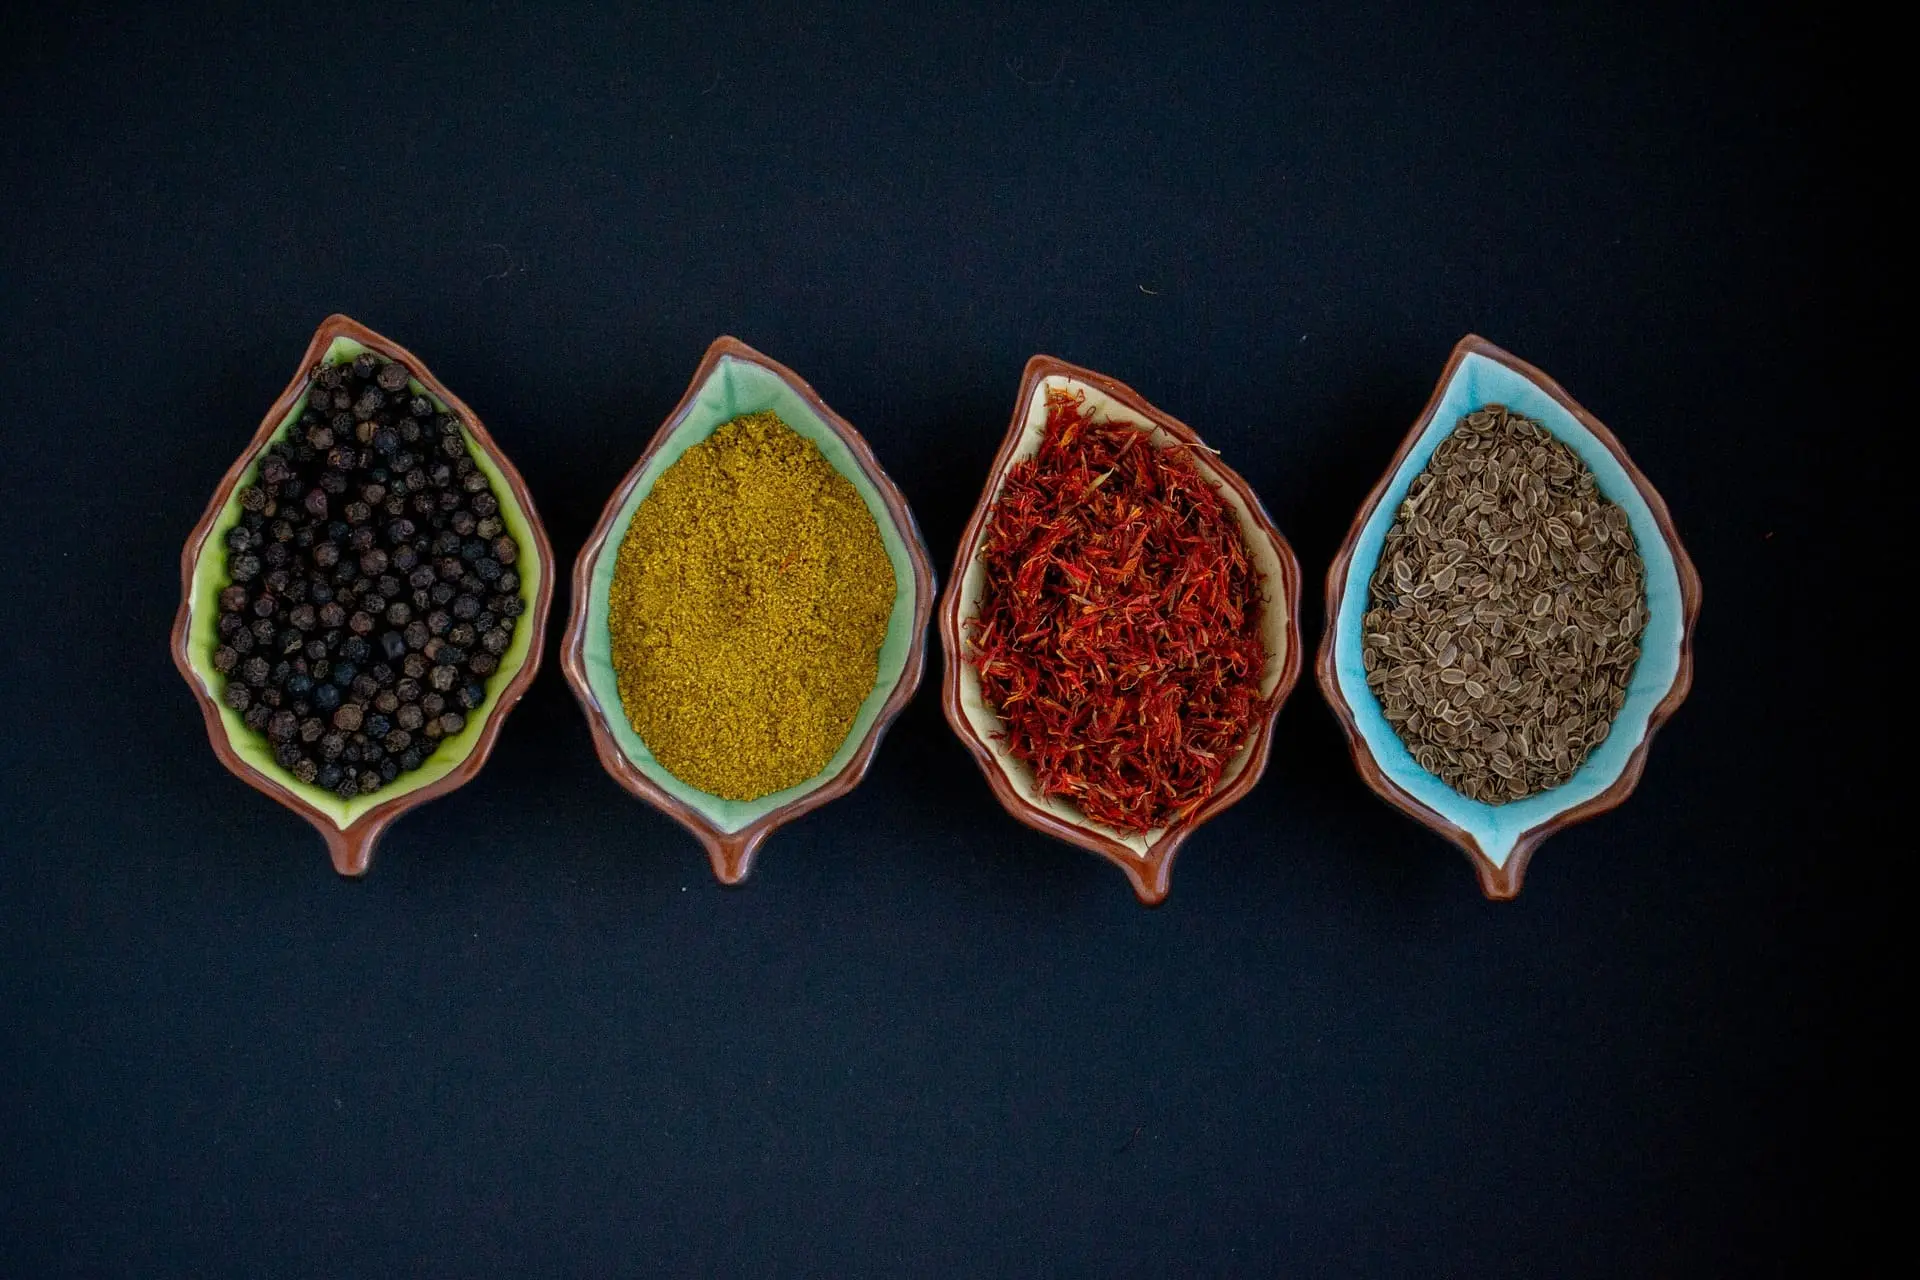 spices health benefits